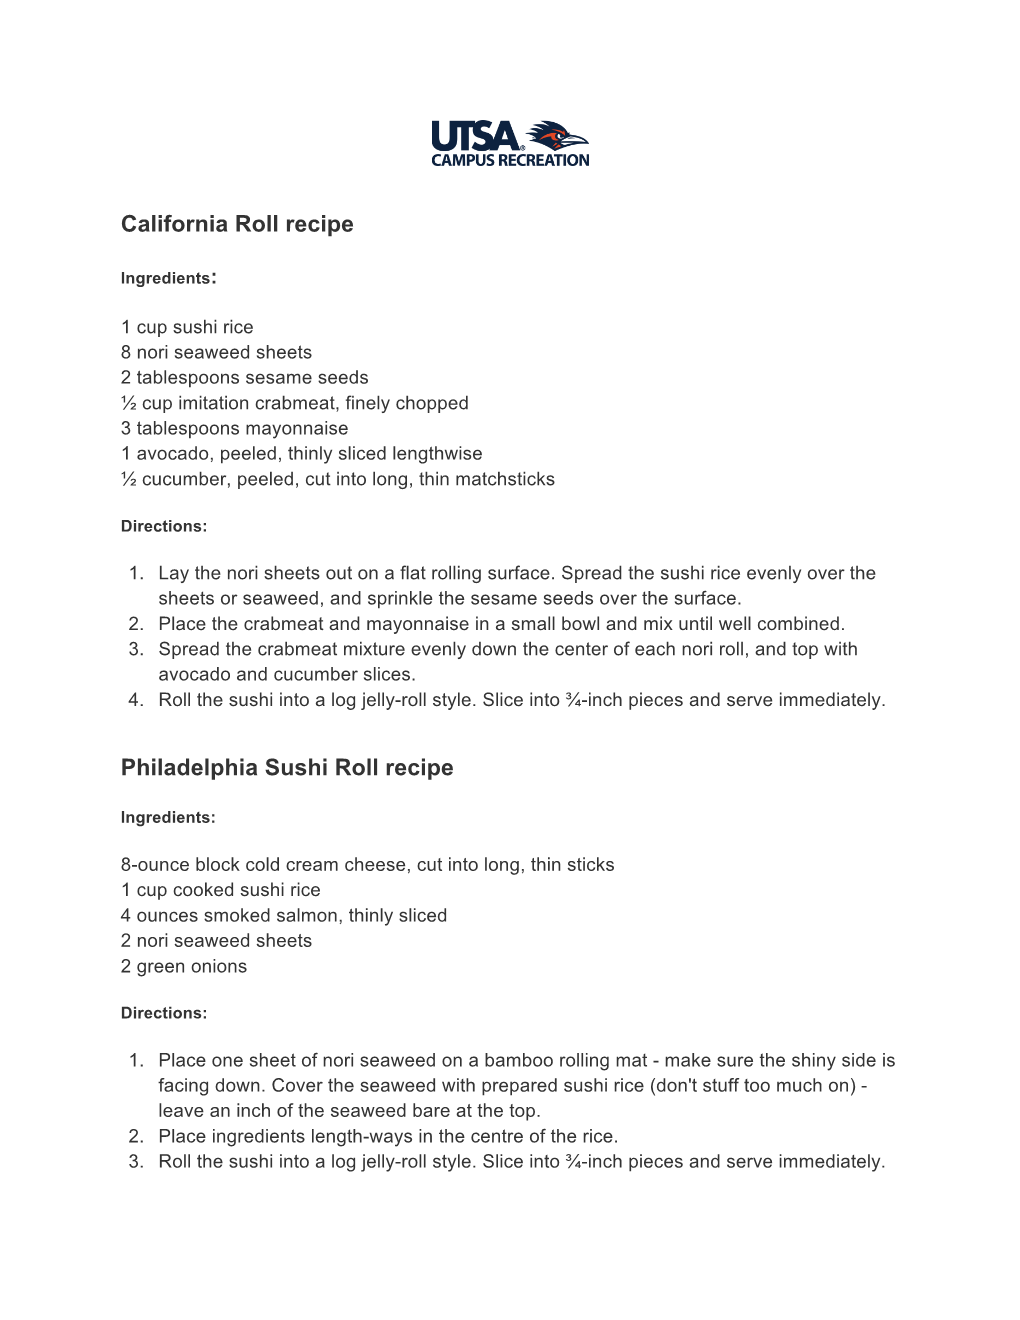 California Roll Recipe Philadelphia Sushi Roll Recipe